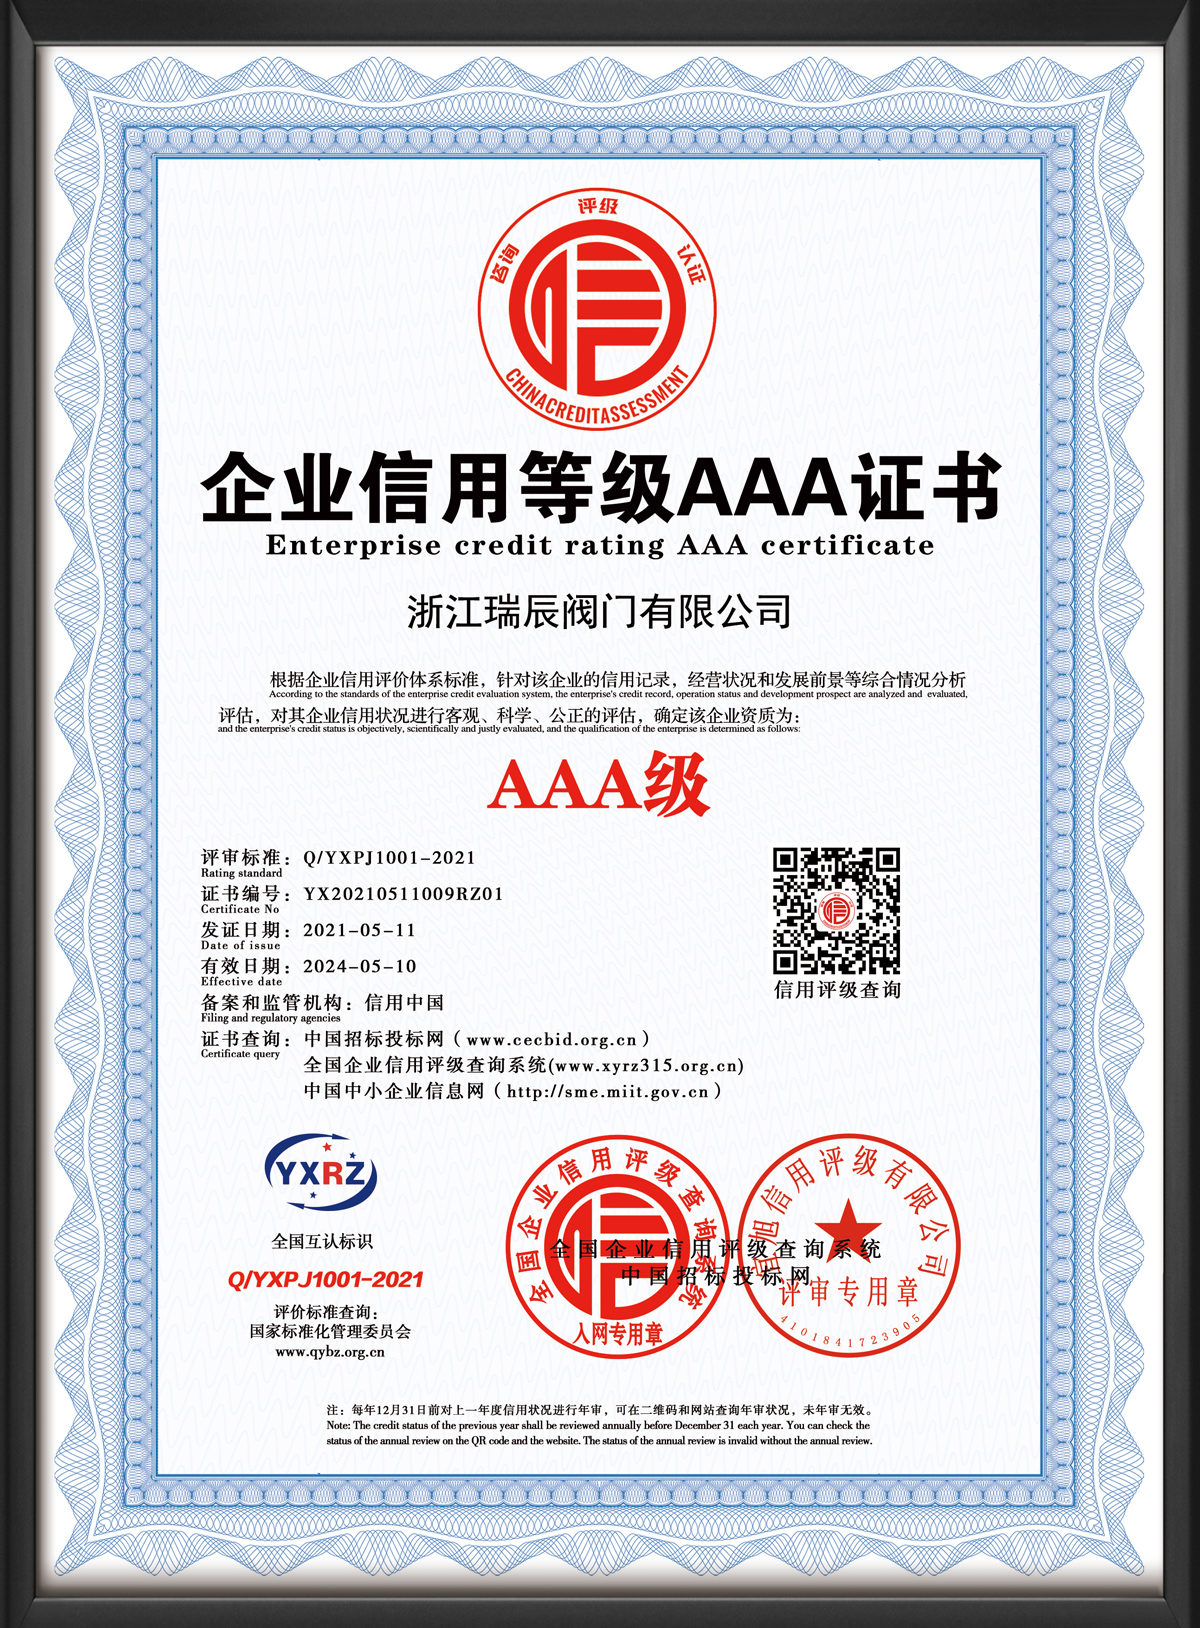 Enterprise credit rating 3A certificate